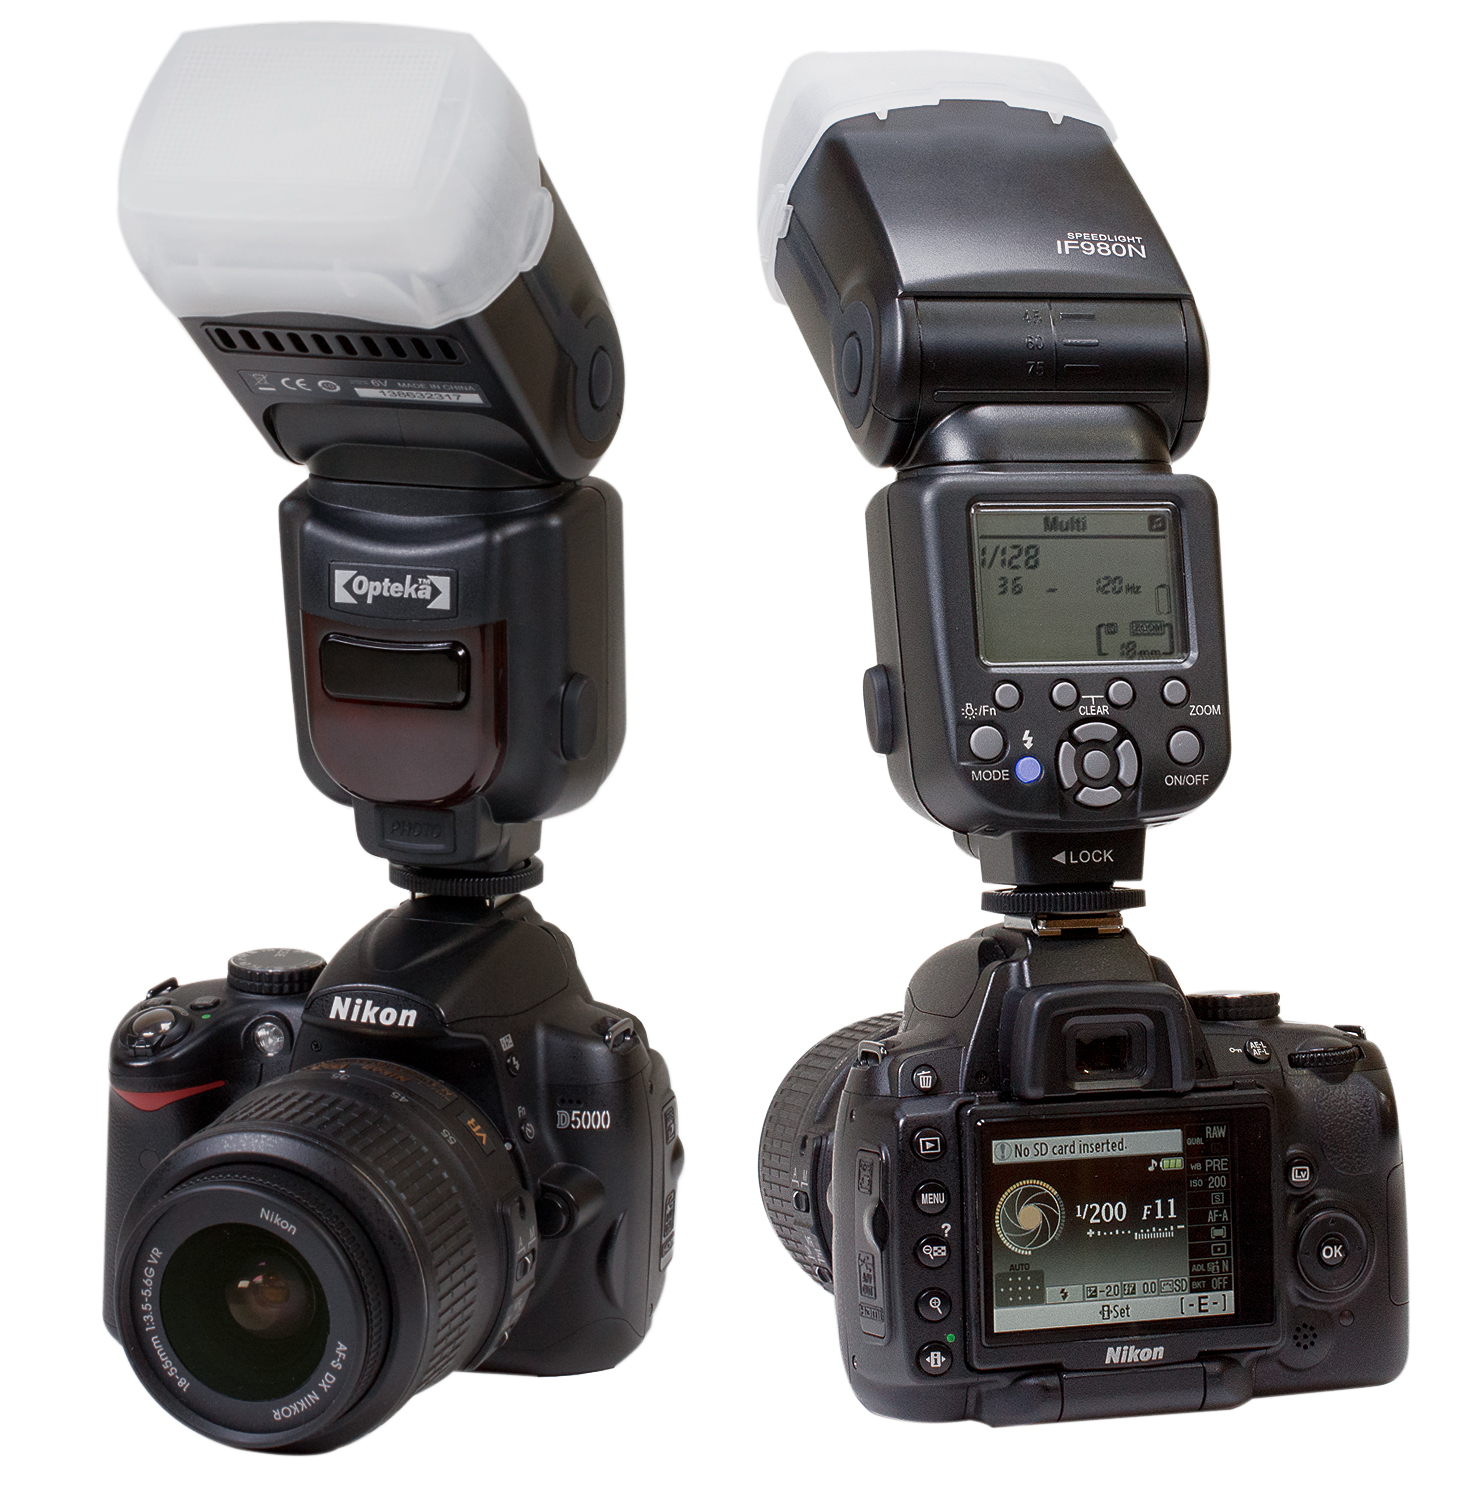 Opteka IF-980 i-TTL AF Dedicated Flash w/ LCD Display for Nikon Digital SLR Cameras w/ Wireless Remote Control & Accessories